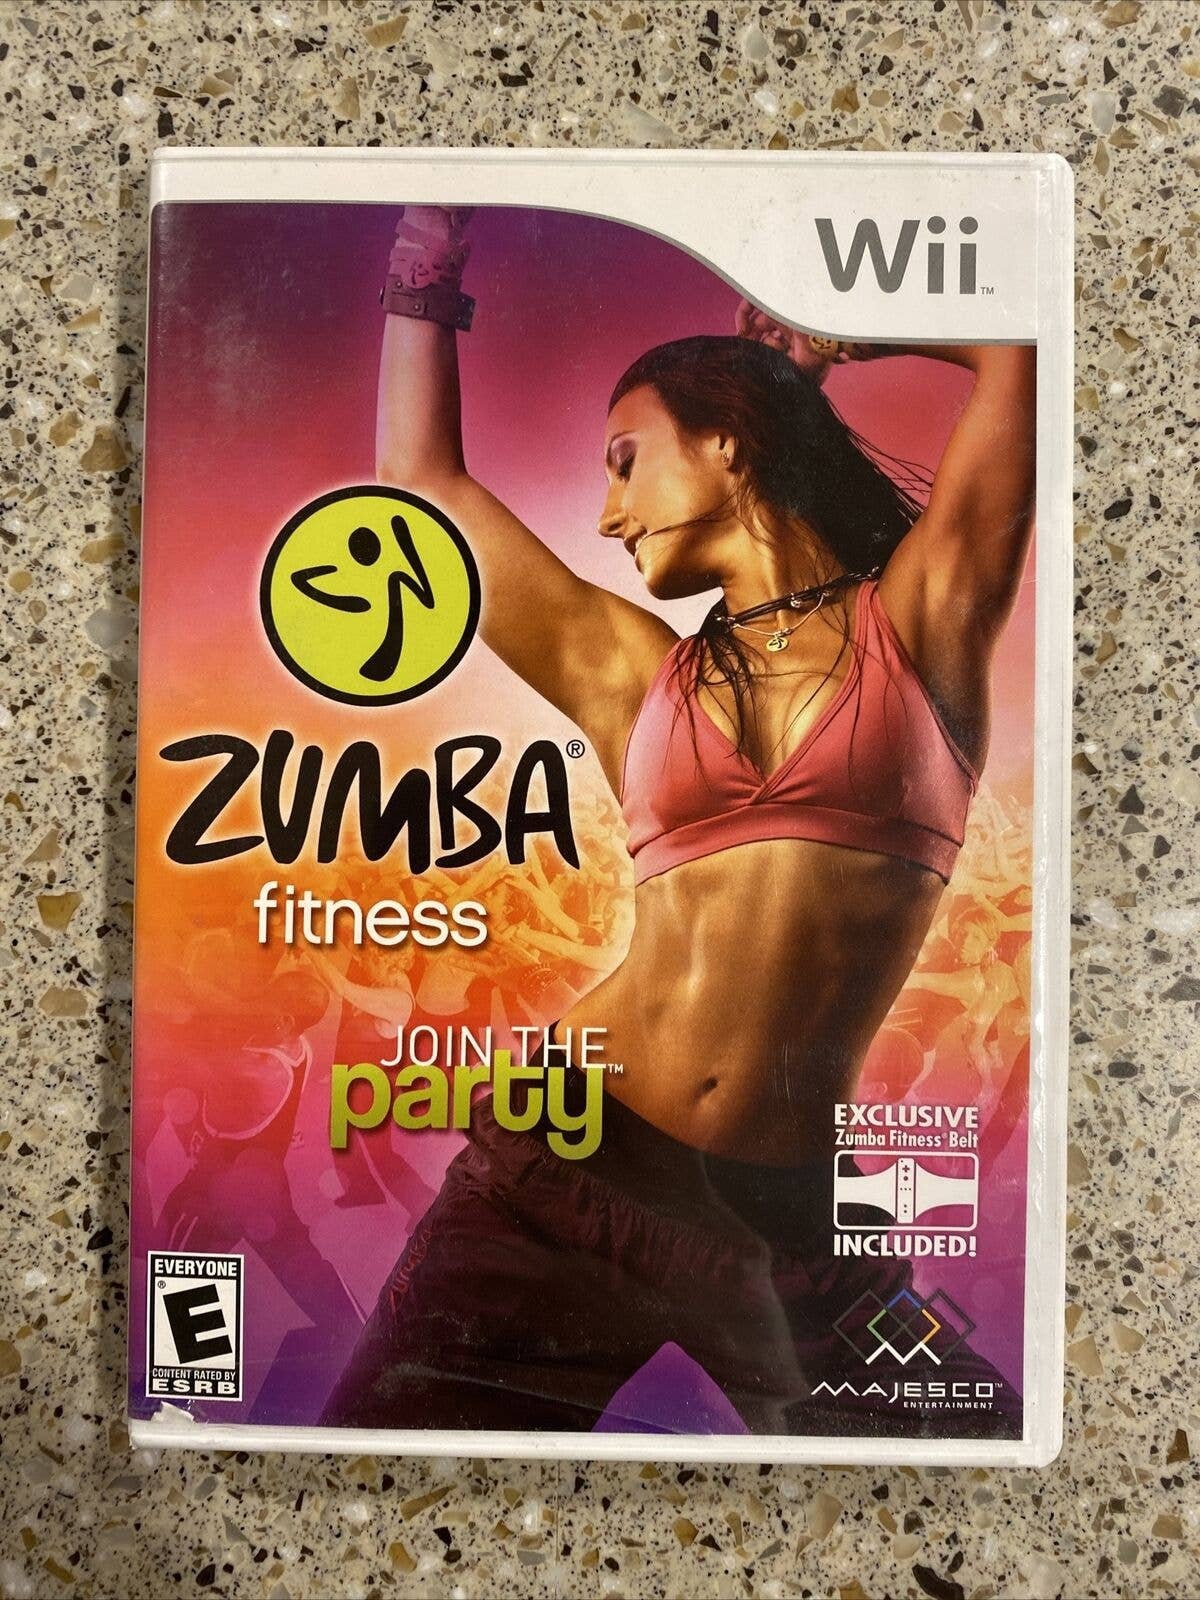 Premedicatie Dwang Waden Nintendo Wii Zumba Fitness Join the Party Game No Belt - Etsy